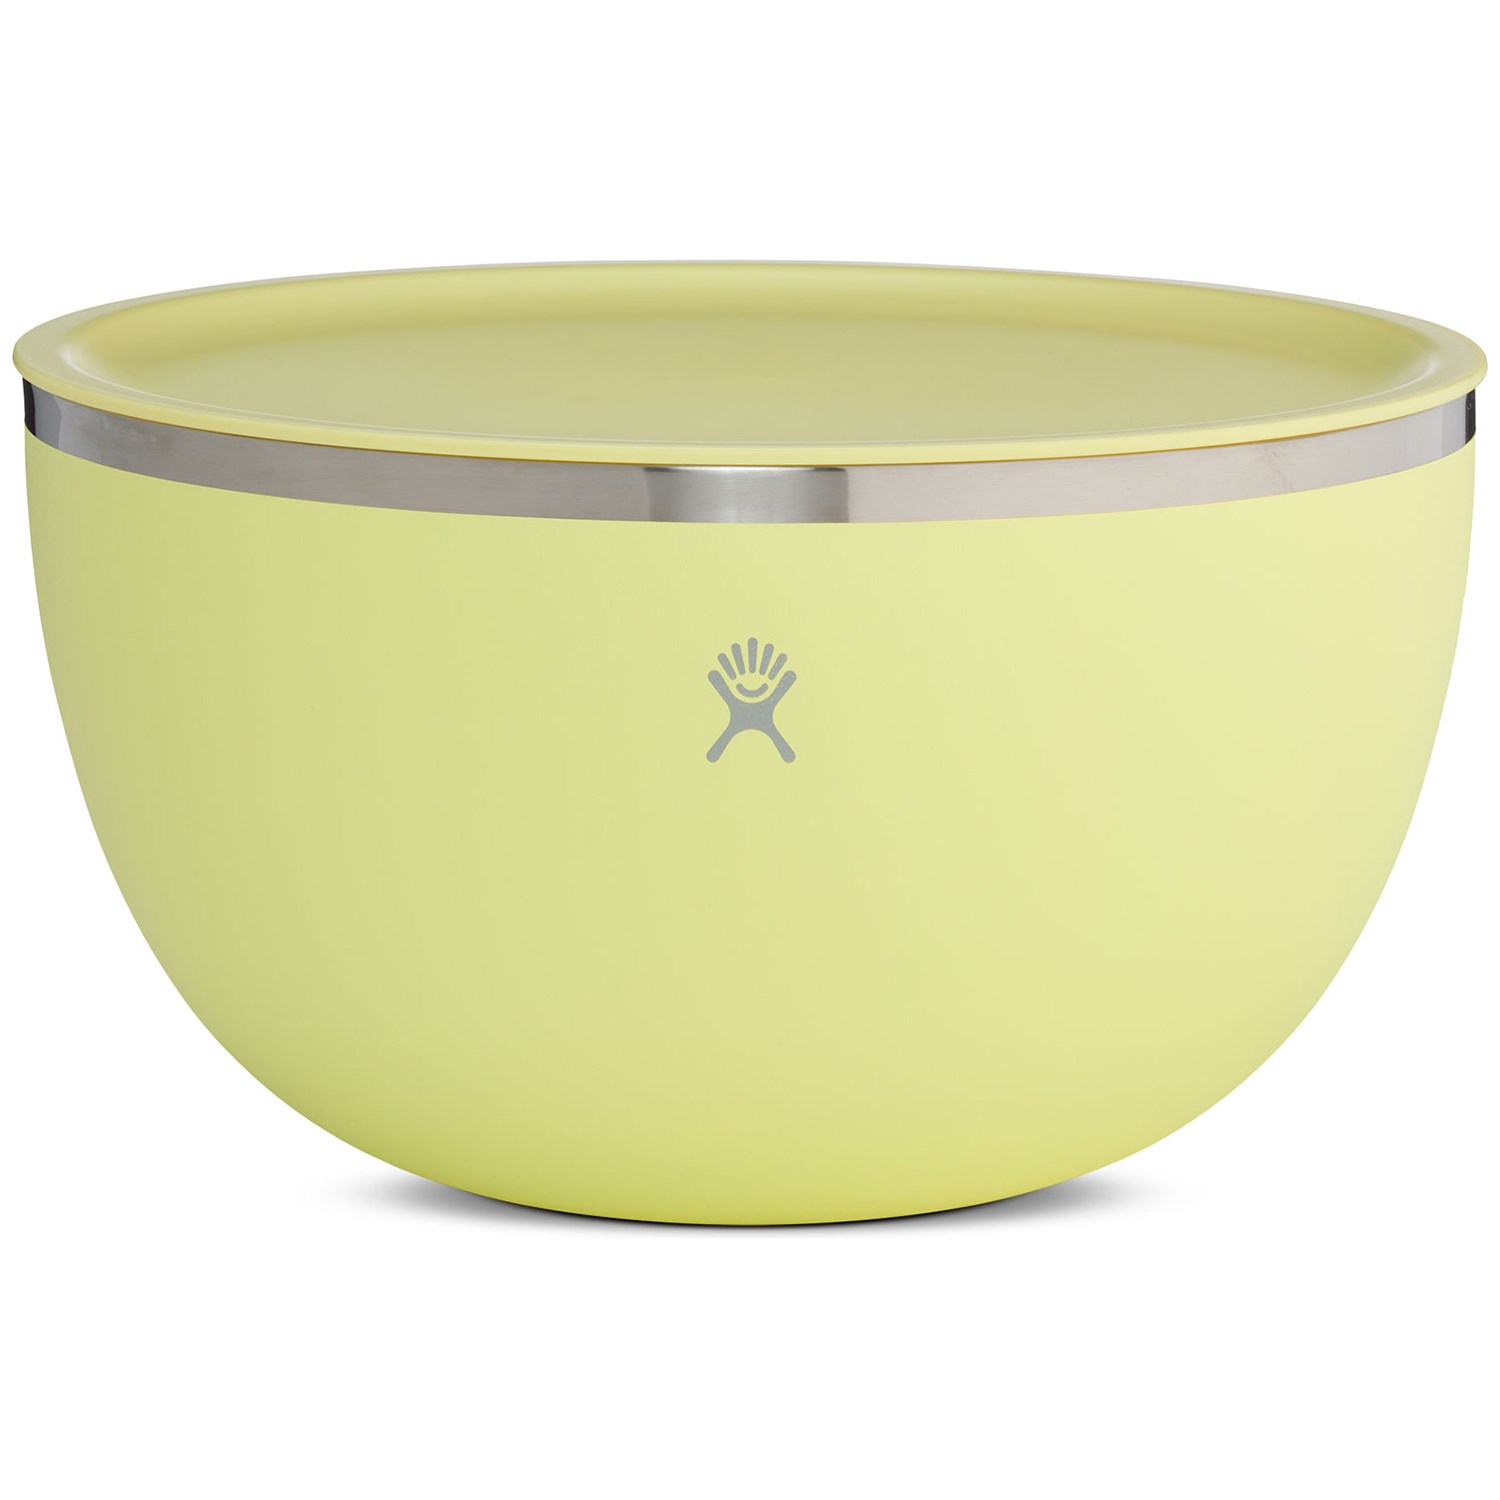 https://images.evo.com/imgp/zoom/188732/783836/hydro-flask-3-quart-serving-bowl-with-lid-.jpg